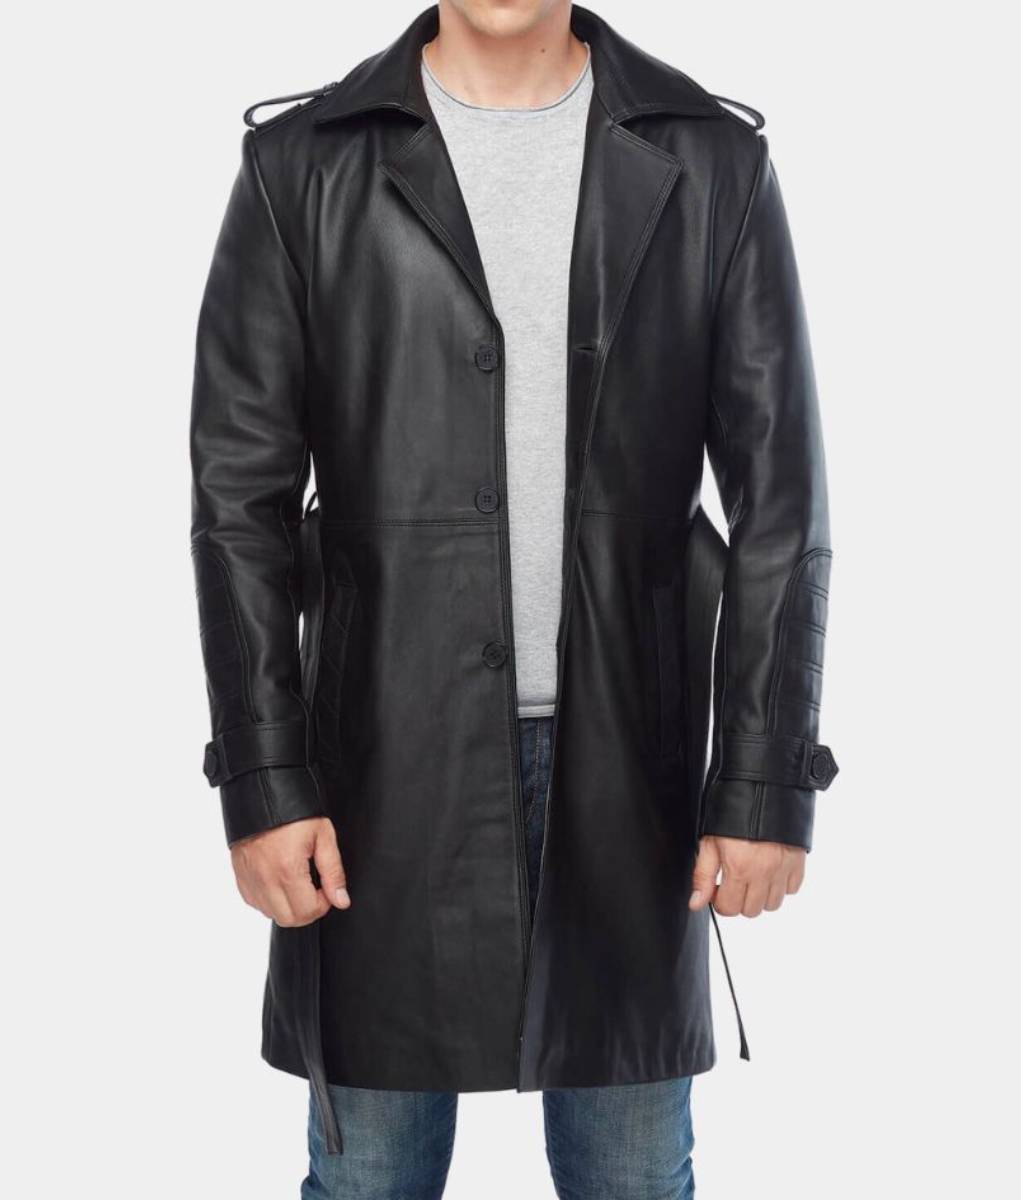 Silent Night Godlock Black Leather Jacket – 3/4 Length Car Coat with Waist Belt – Front View – 1